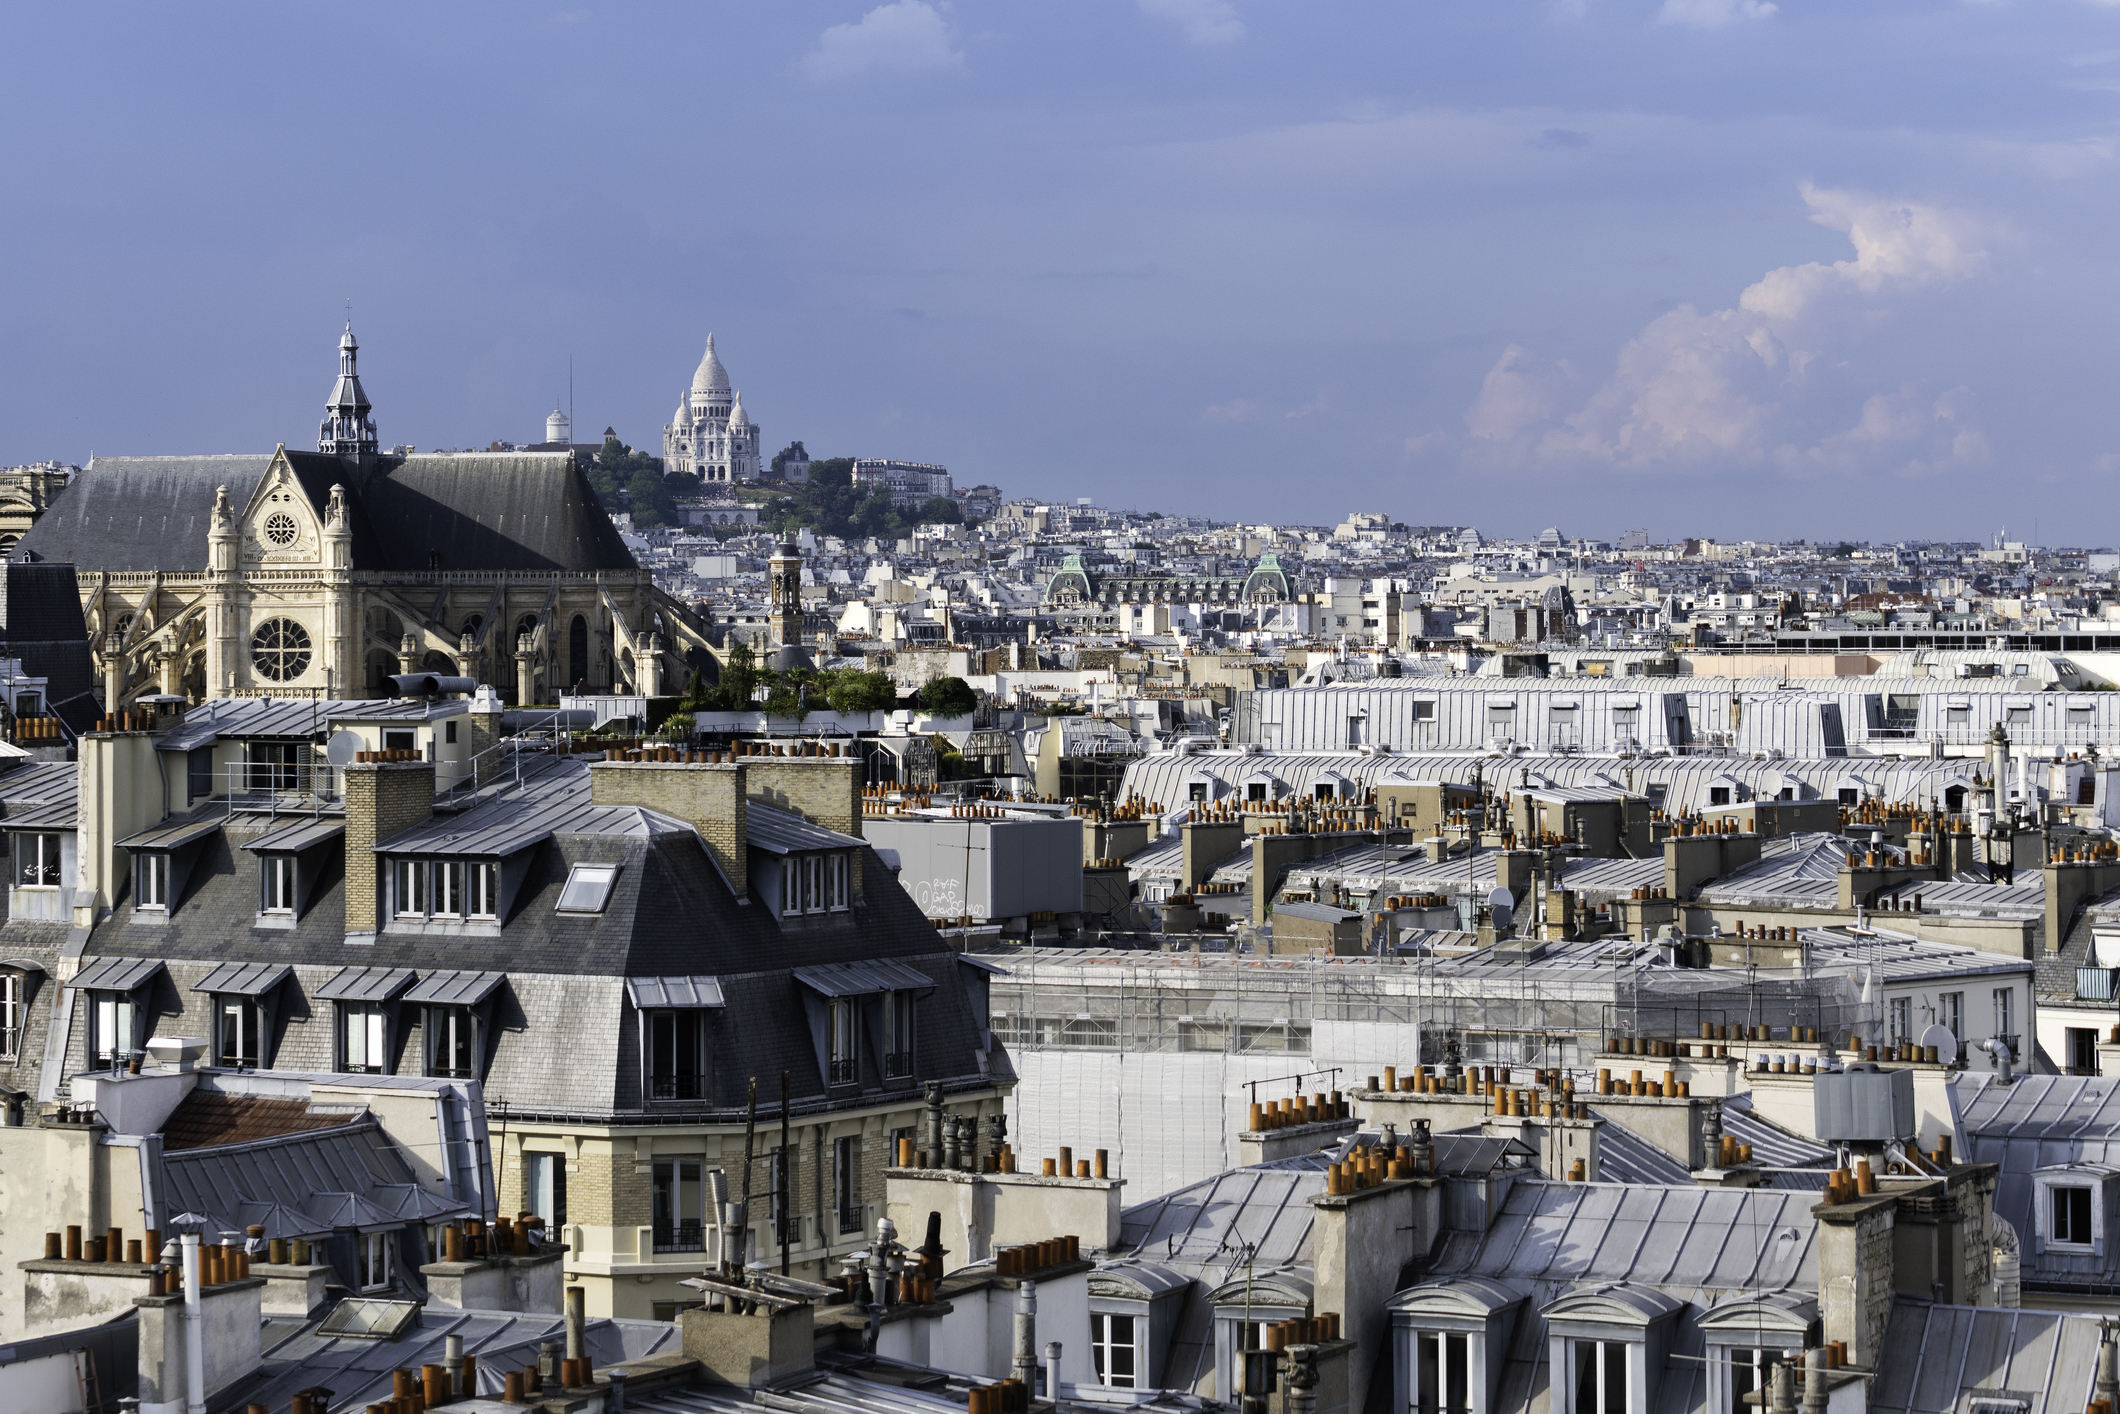 Rooftop view of Paris architecture with the Sacré-Cœur Basilica in the distance